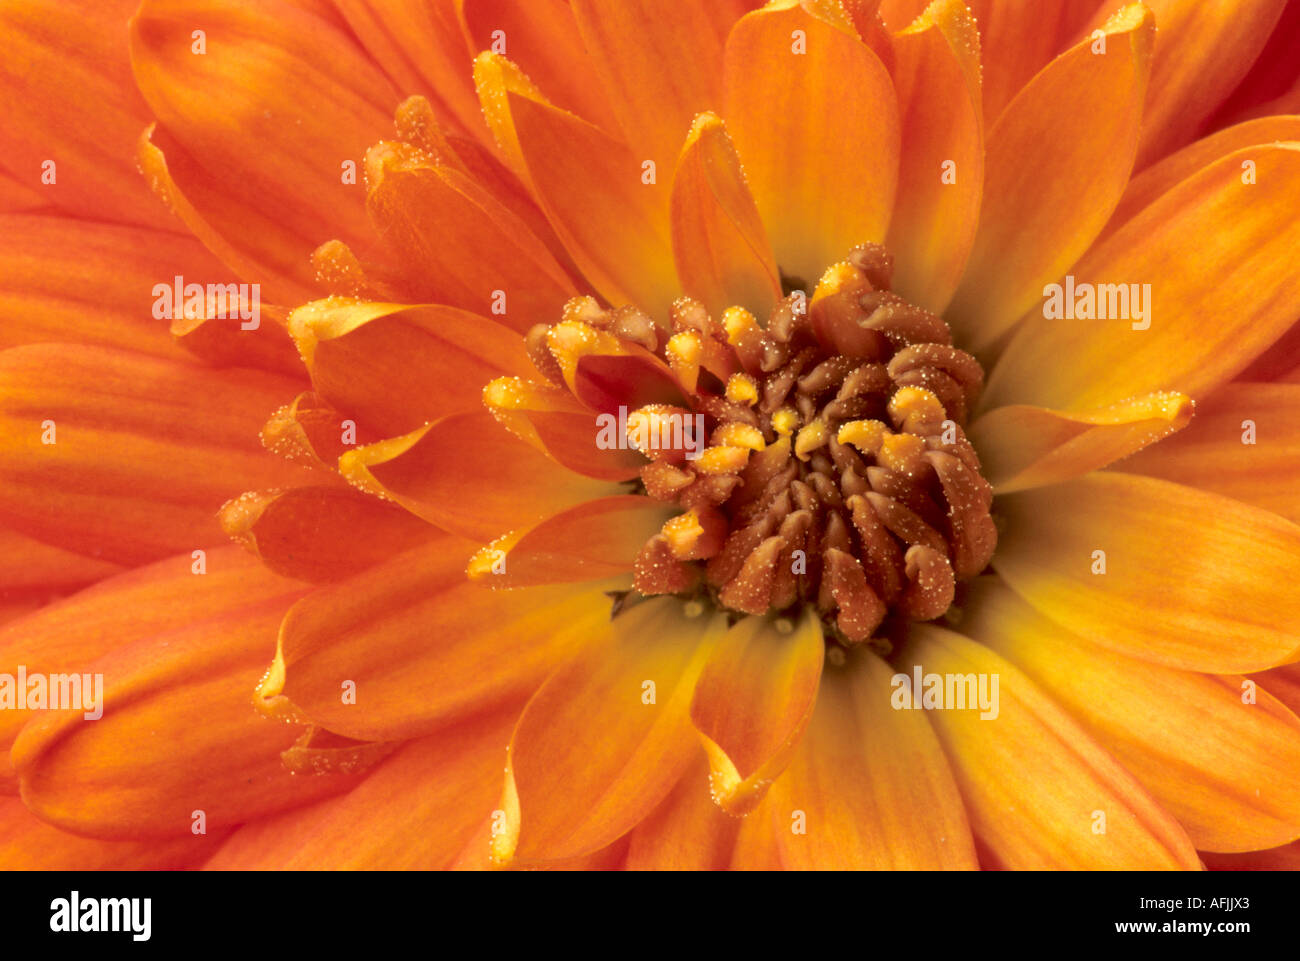 Chrysanthemum, Orange flower detail, Class 4, Decorative Stock Photo